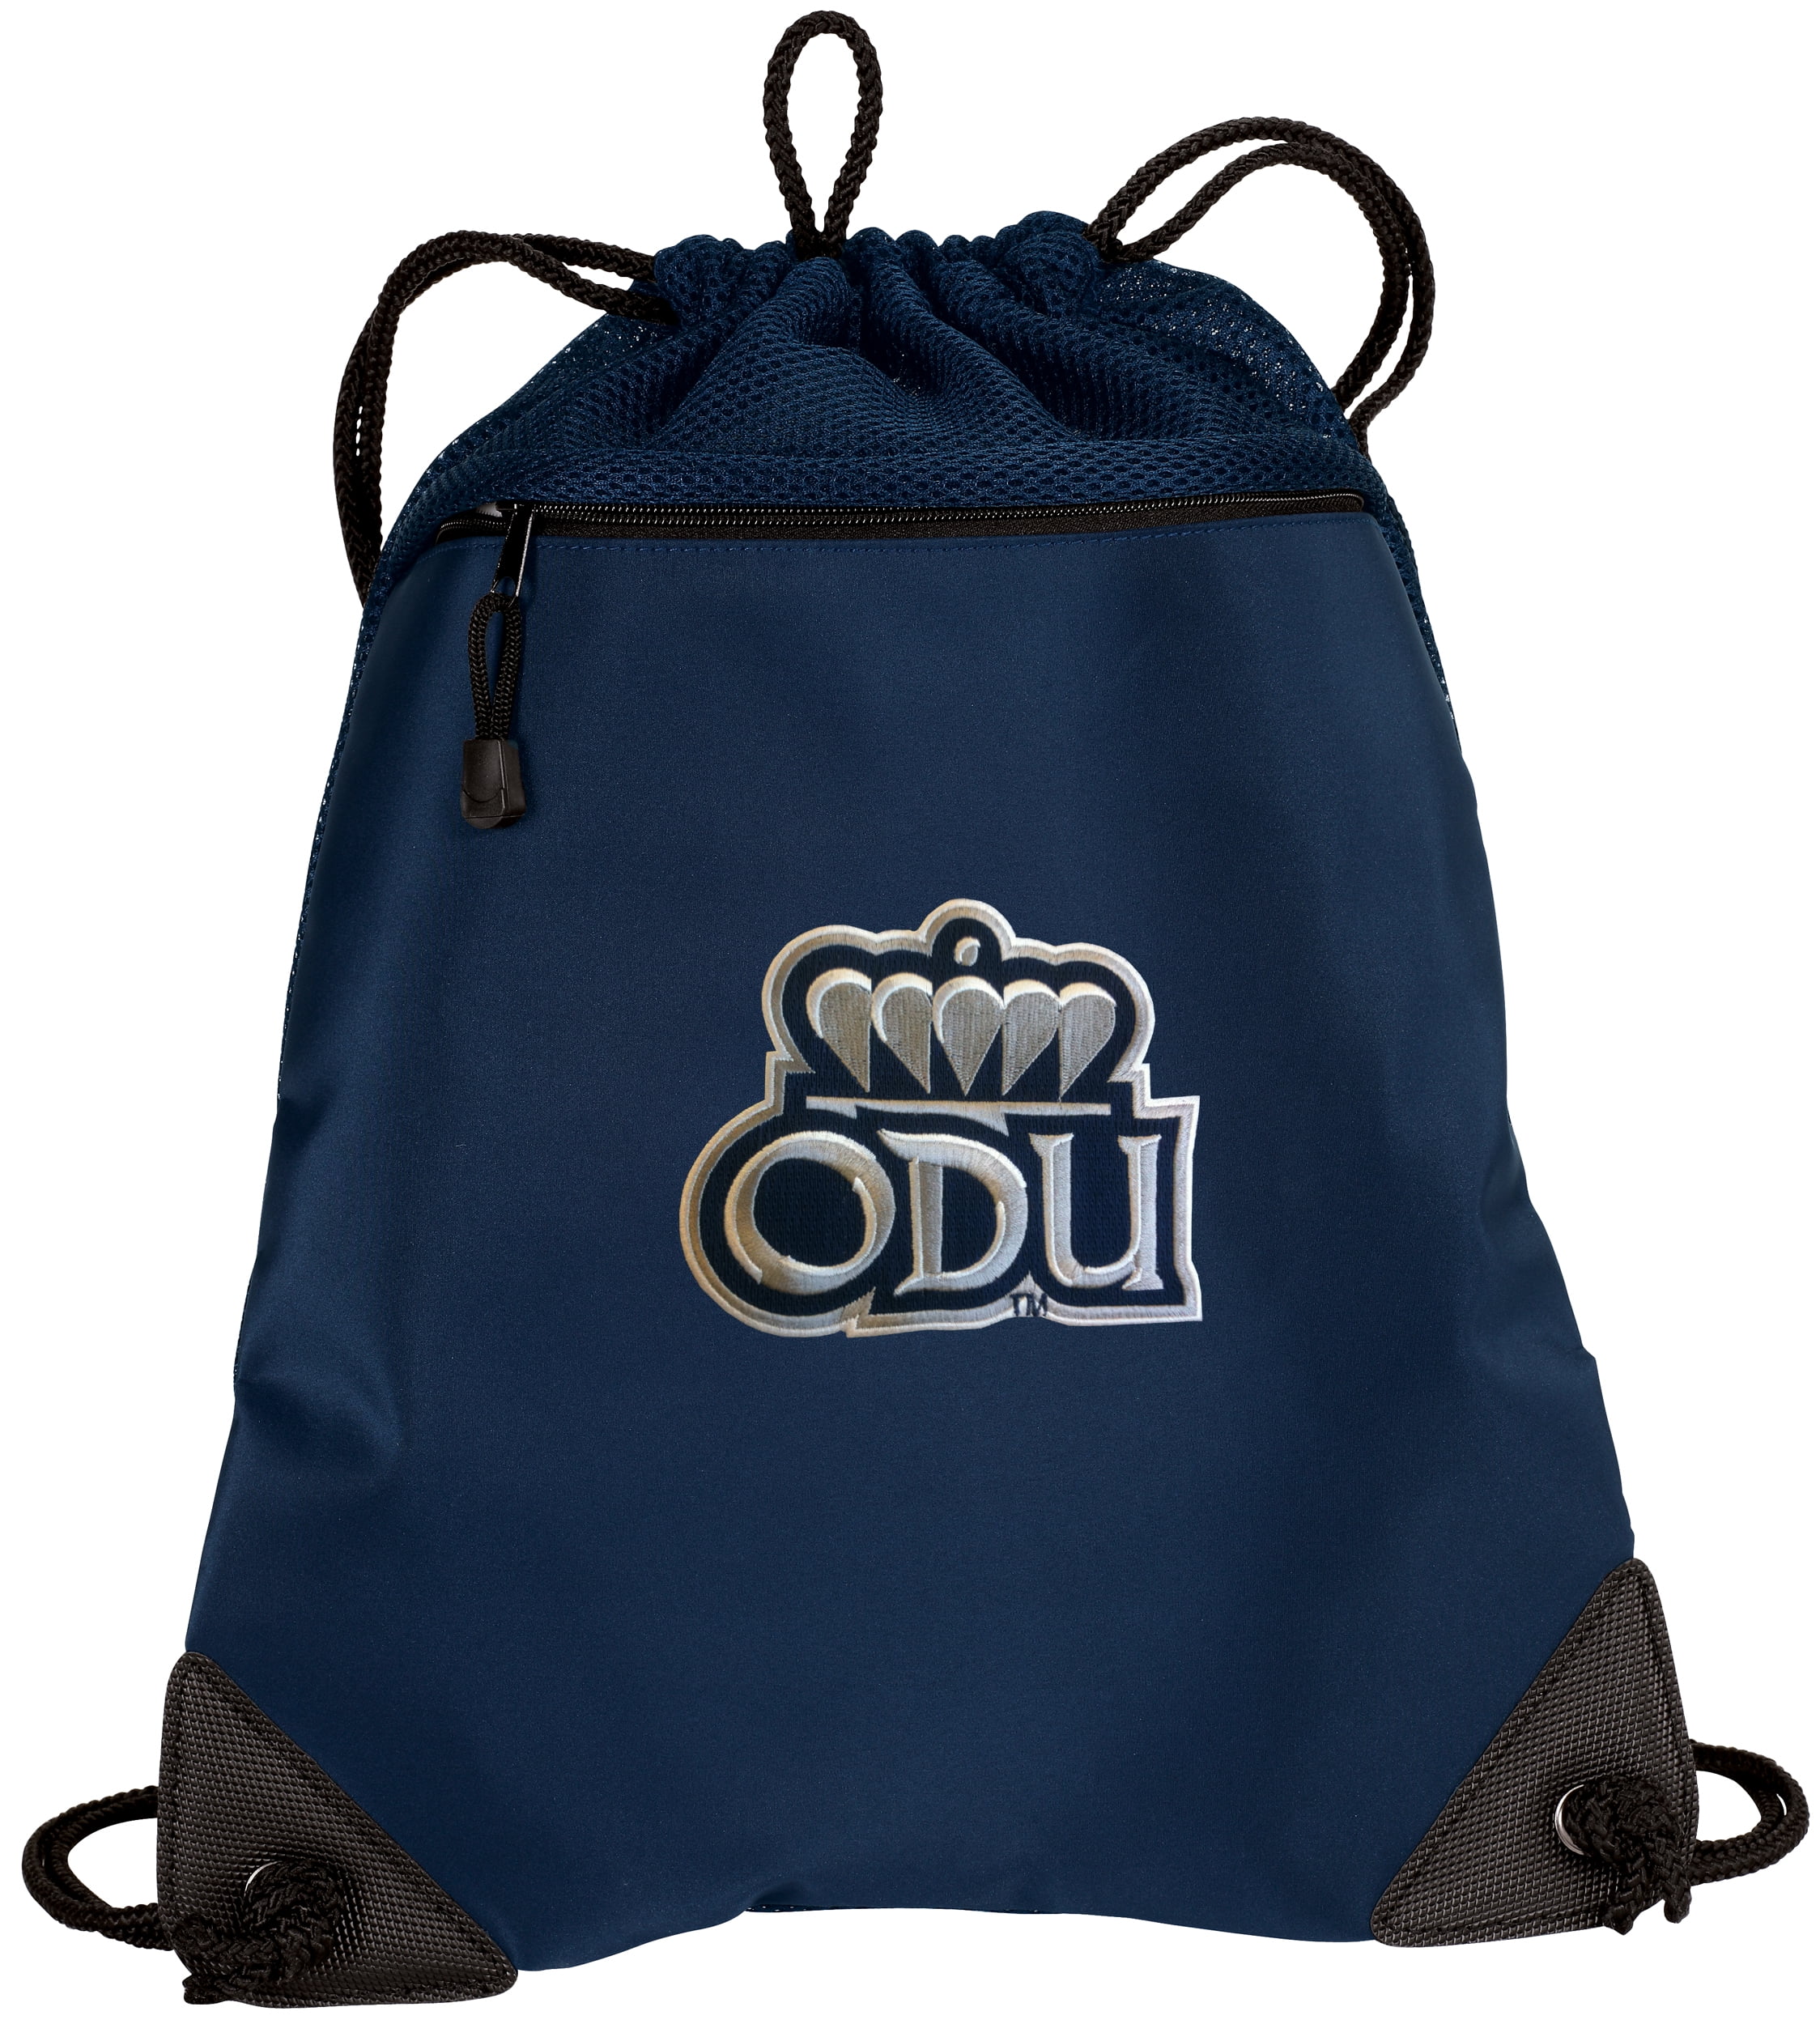 Broad Bay ODU Duffel Bag Old Dominion University Gym Bags w/Shoe Pockets 